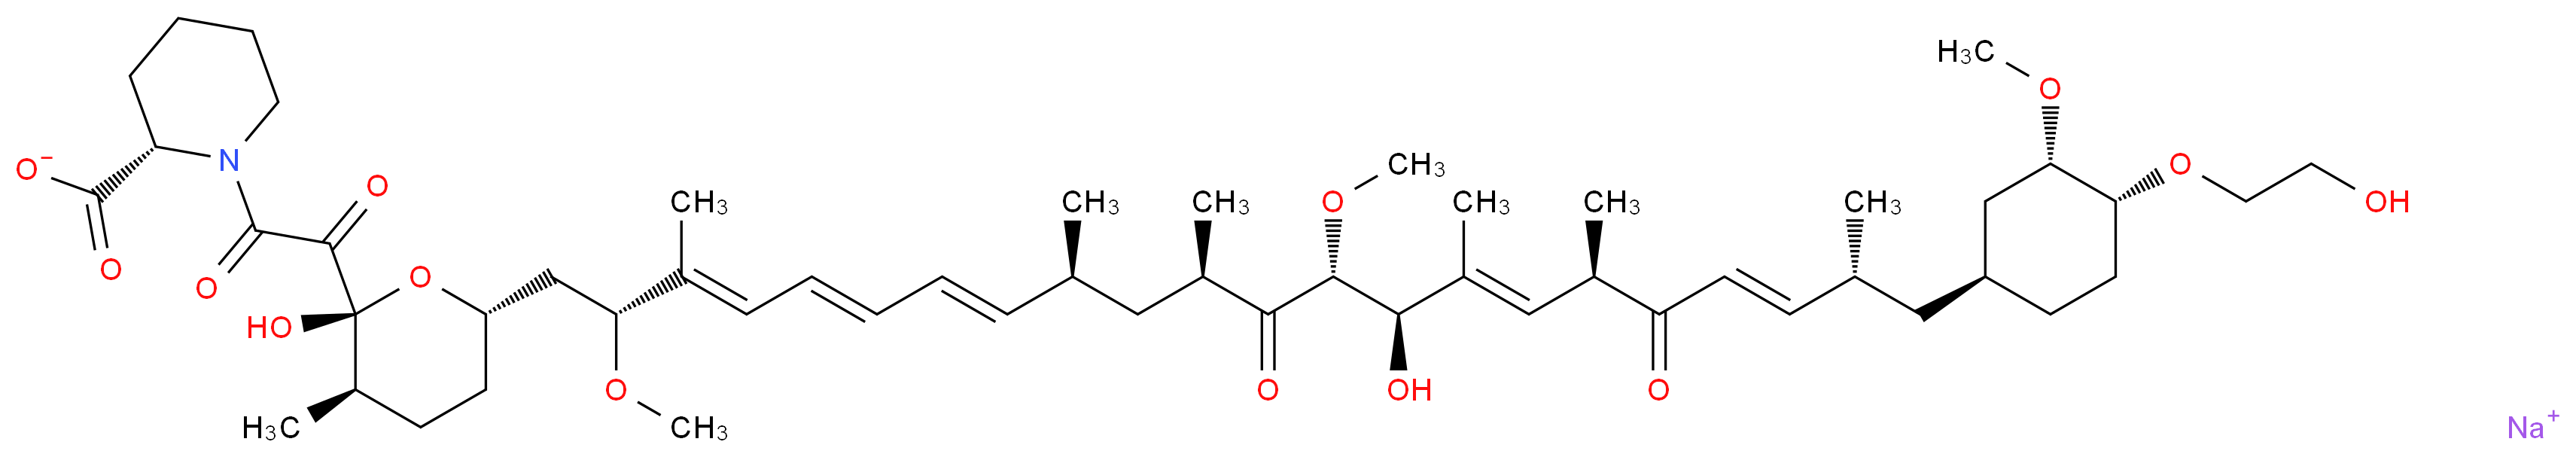 (19E/Z)-seco-[4-O-(2-Hydroxyethyl)] Rapamycin Sodium Salt >80%_Molecular_structure_CAS_)